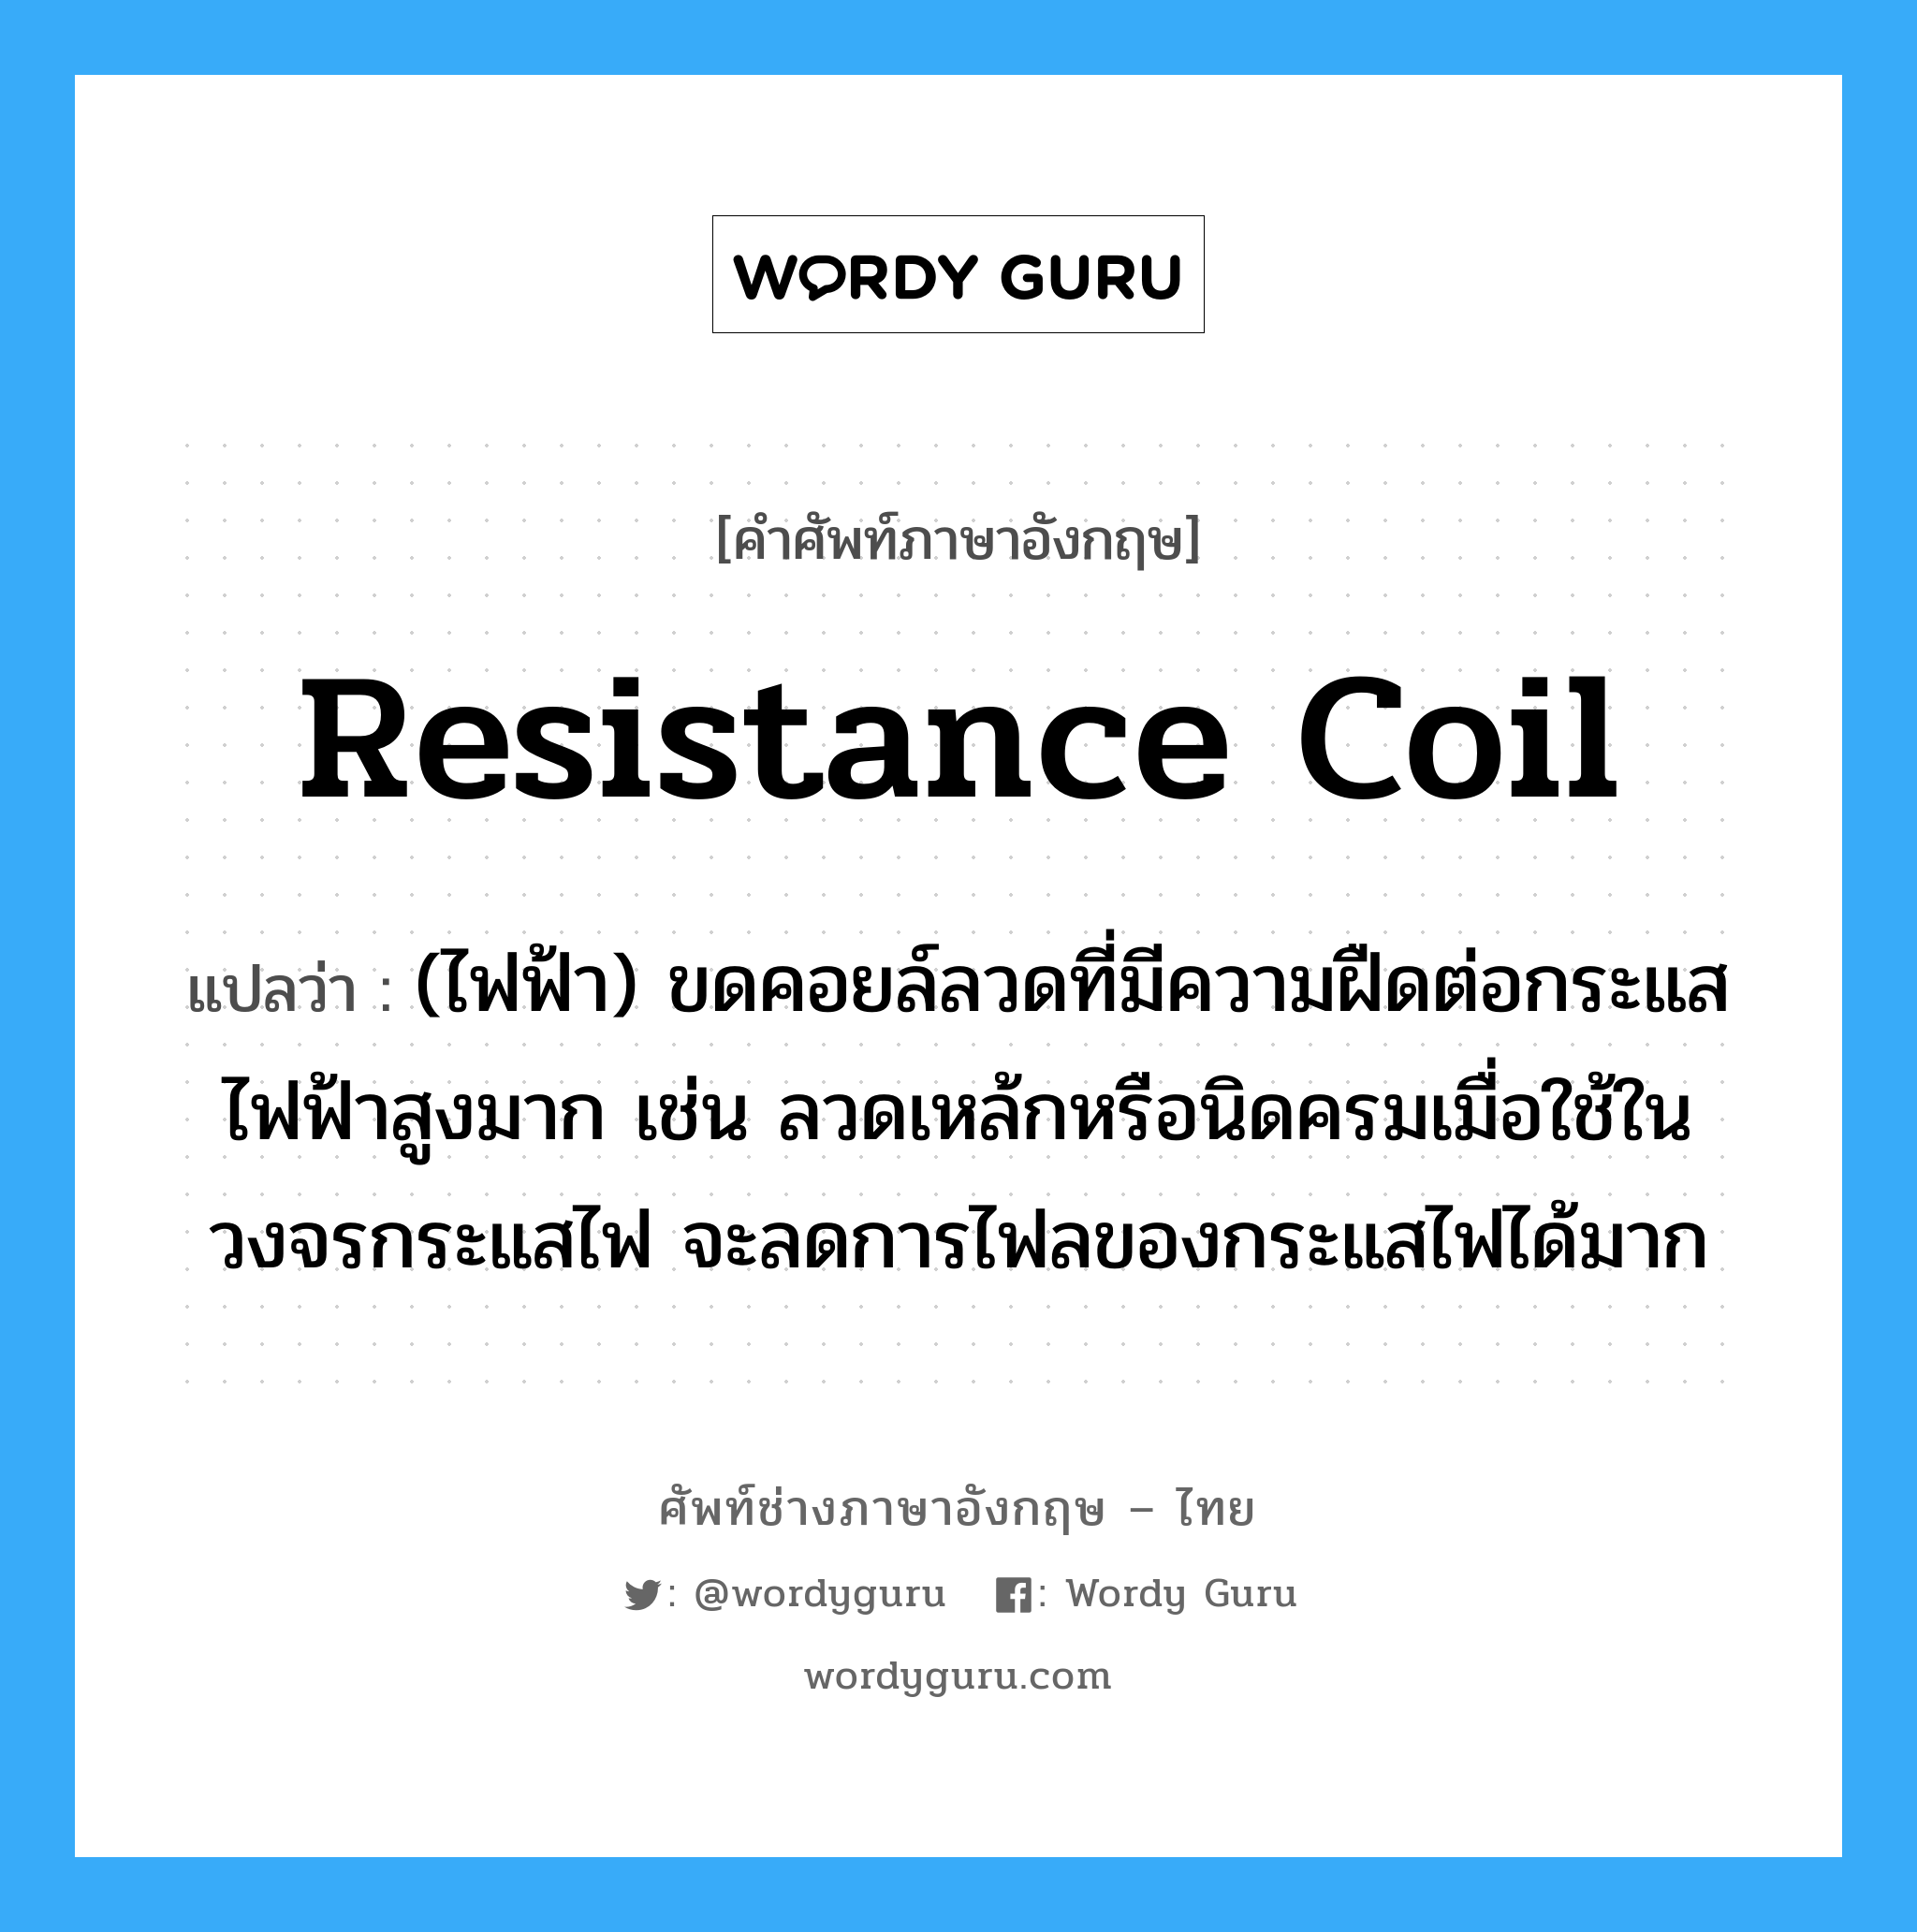 resistance coil แปลว่า?, คำศัพท์ช่างภาษาอังกฤษ - ไทย resistance coil คำศัพท์ภาษาอังกฤษ resistance coil แปลว่า (ไฟฟ้า) ขดคอยล์ลวดที่มีความฝืดต่อกระแสไฟฟ้าสูงมาก เช่น ลวดเหล้กหรือนิดครมเมื่อใช้ในวงจรกระแสไฟ จะลดการไฟลของกระแสไฟได้มาก